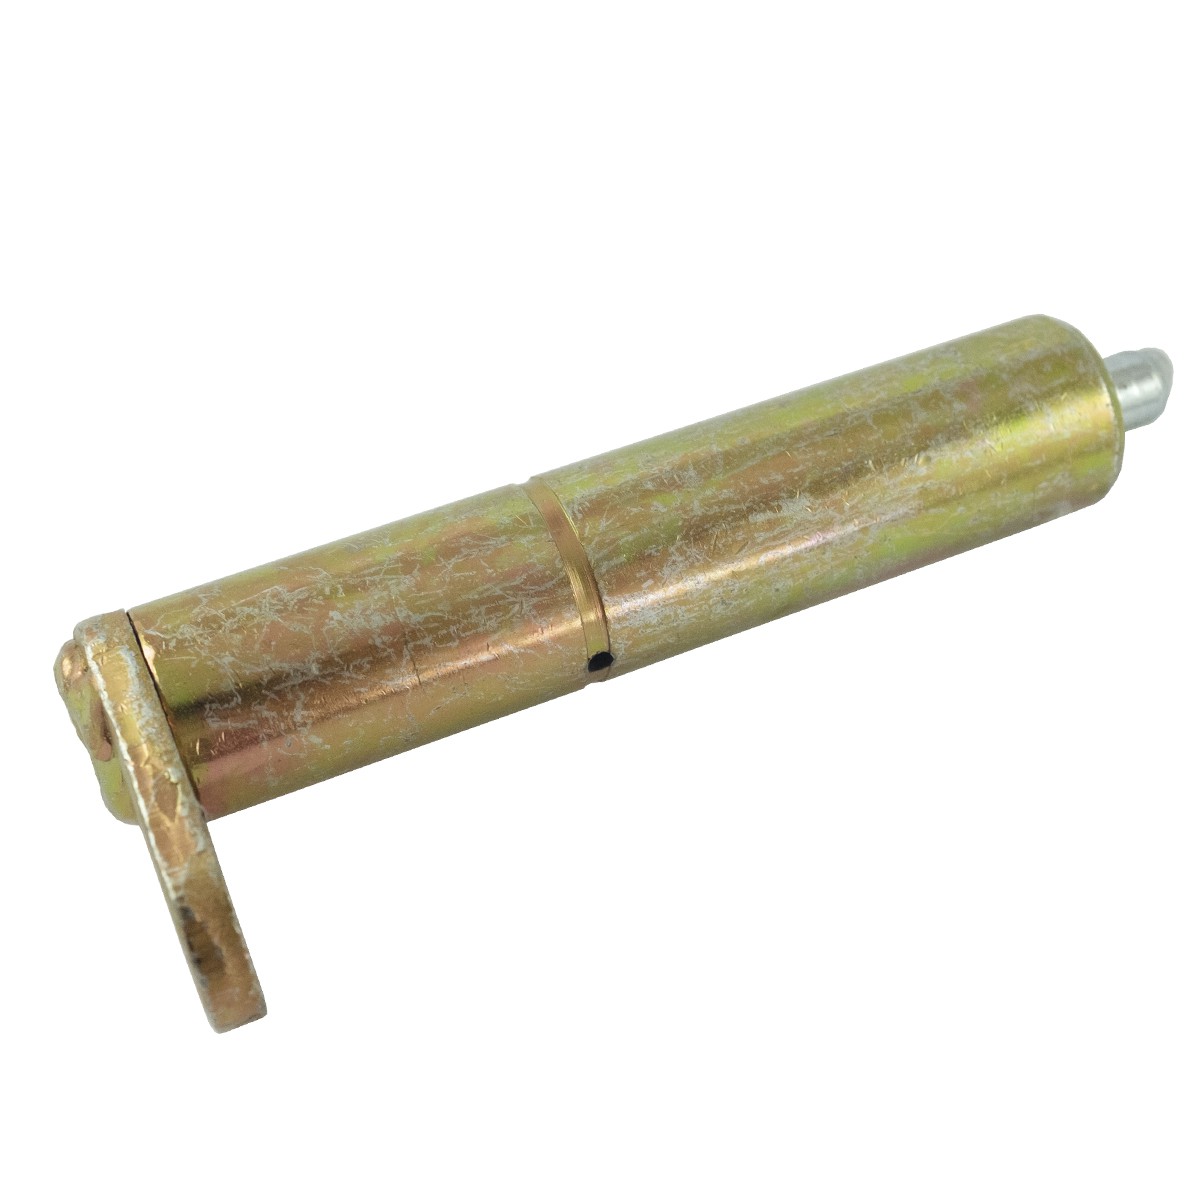 126 mm pin with lock and Kubota M9540 grease nipple